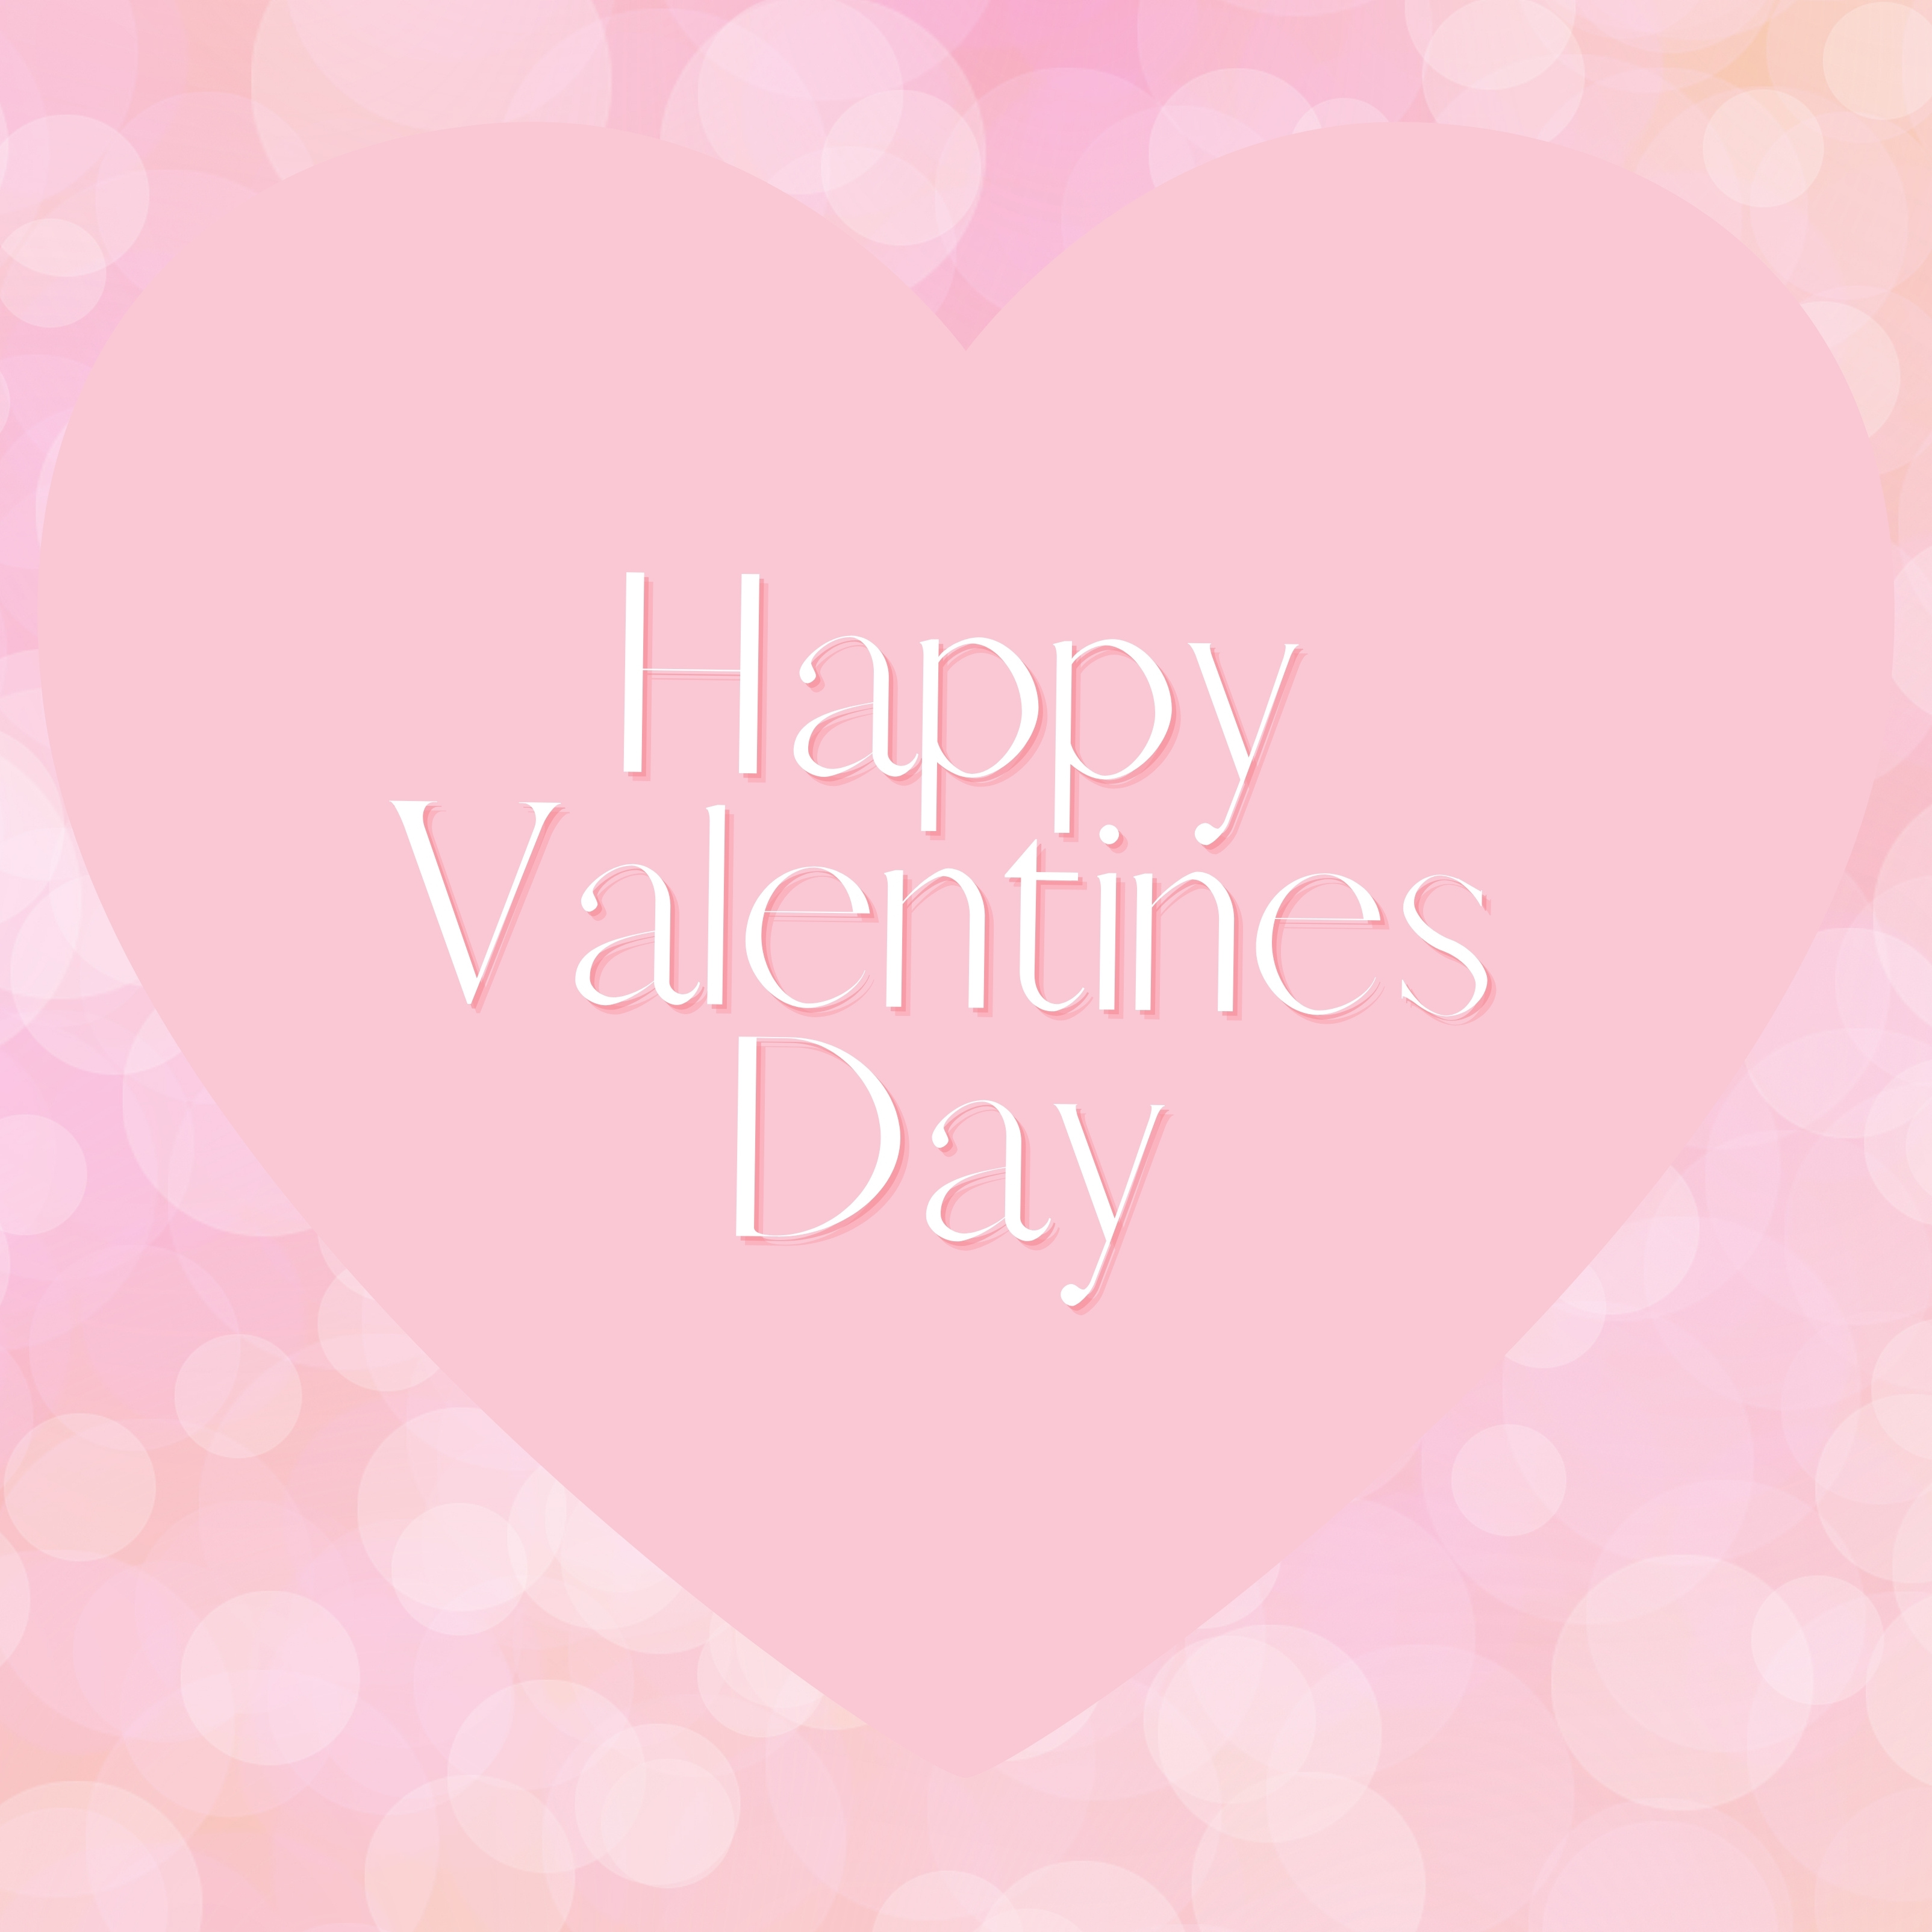 iPad Wallpapers Happy Valentines Day Heart Pink iPad Wallpaper 3208x3208 px